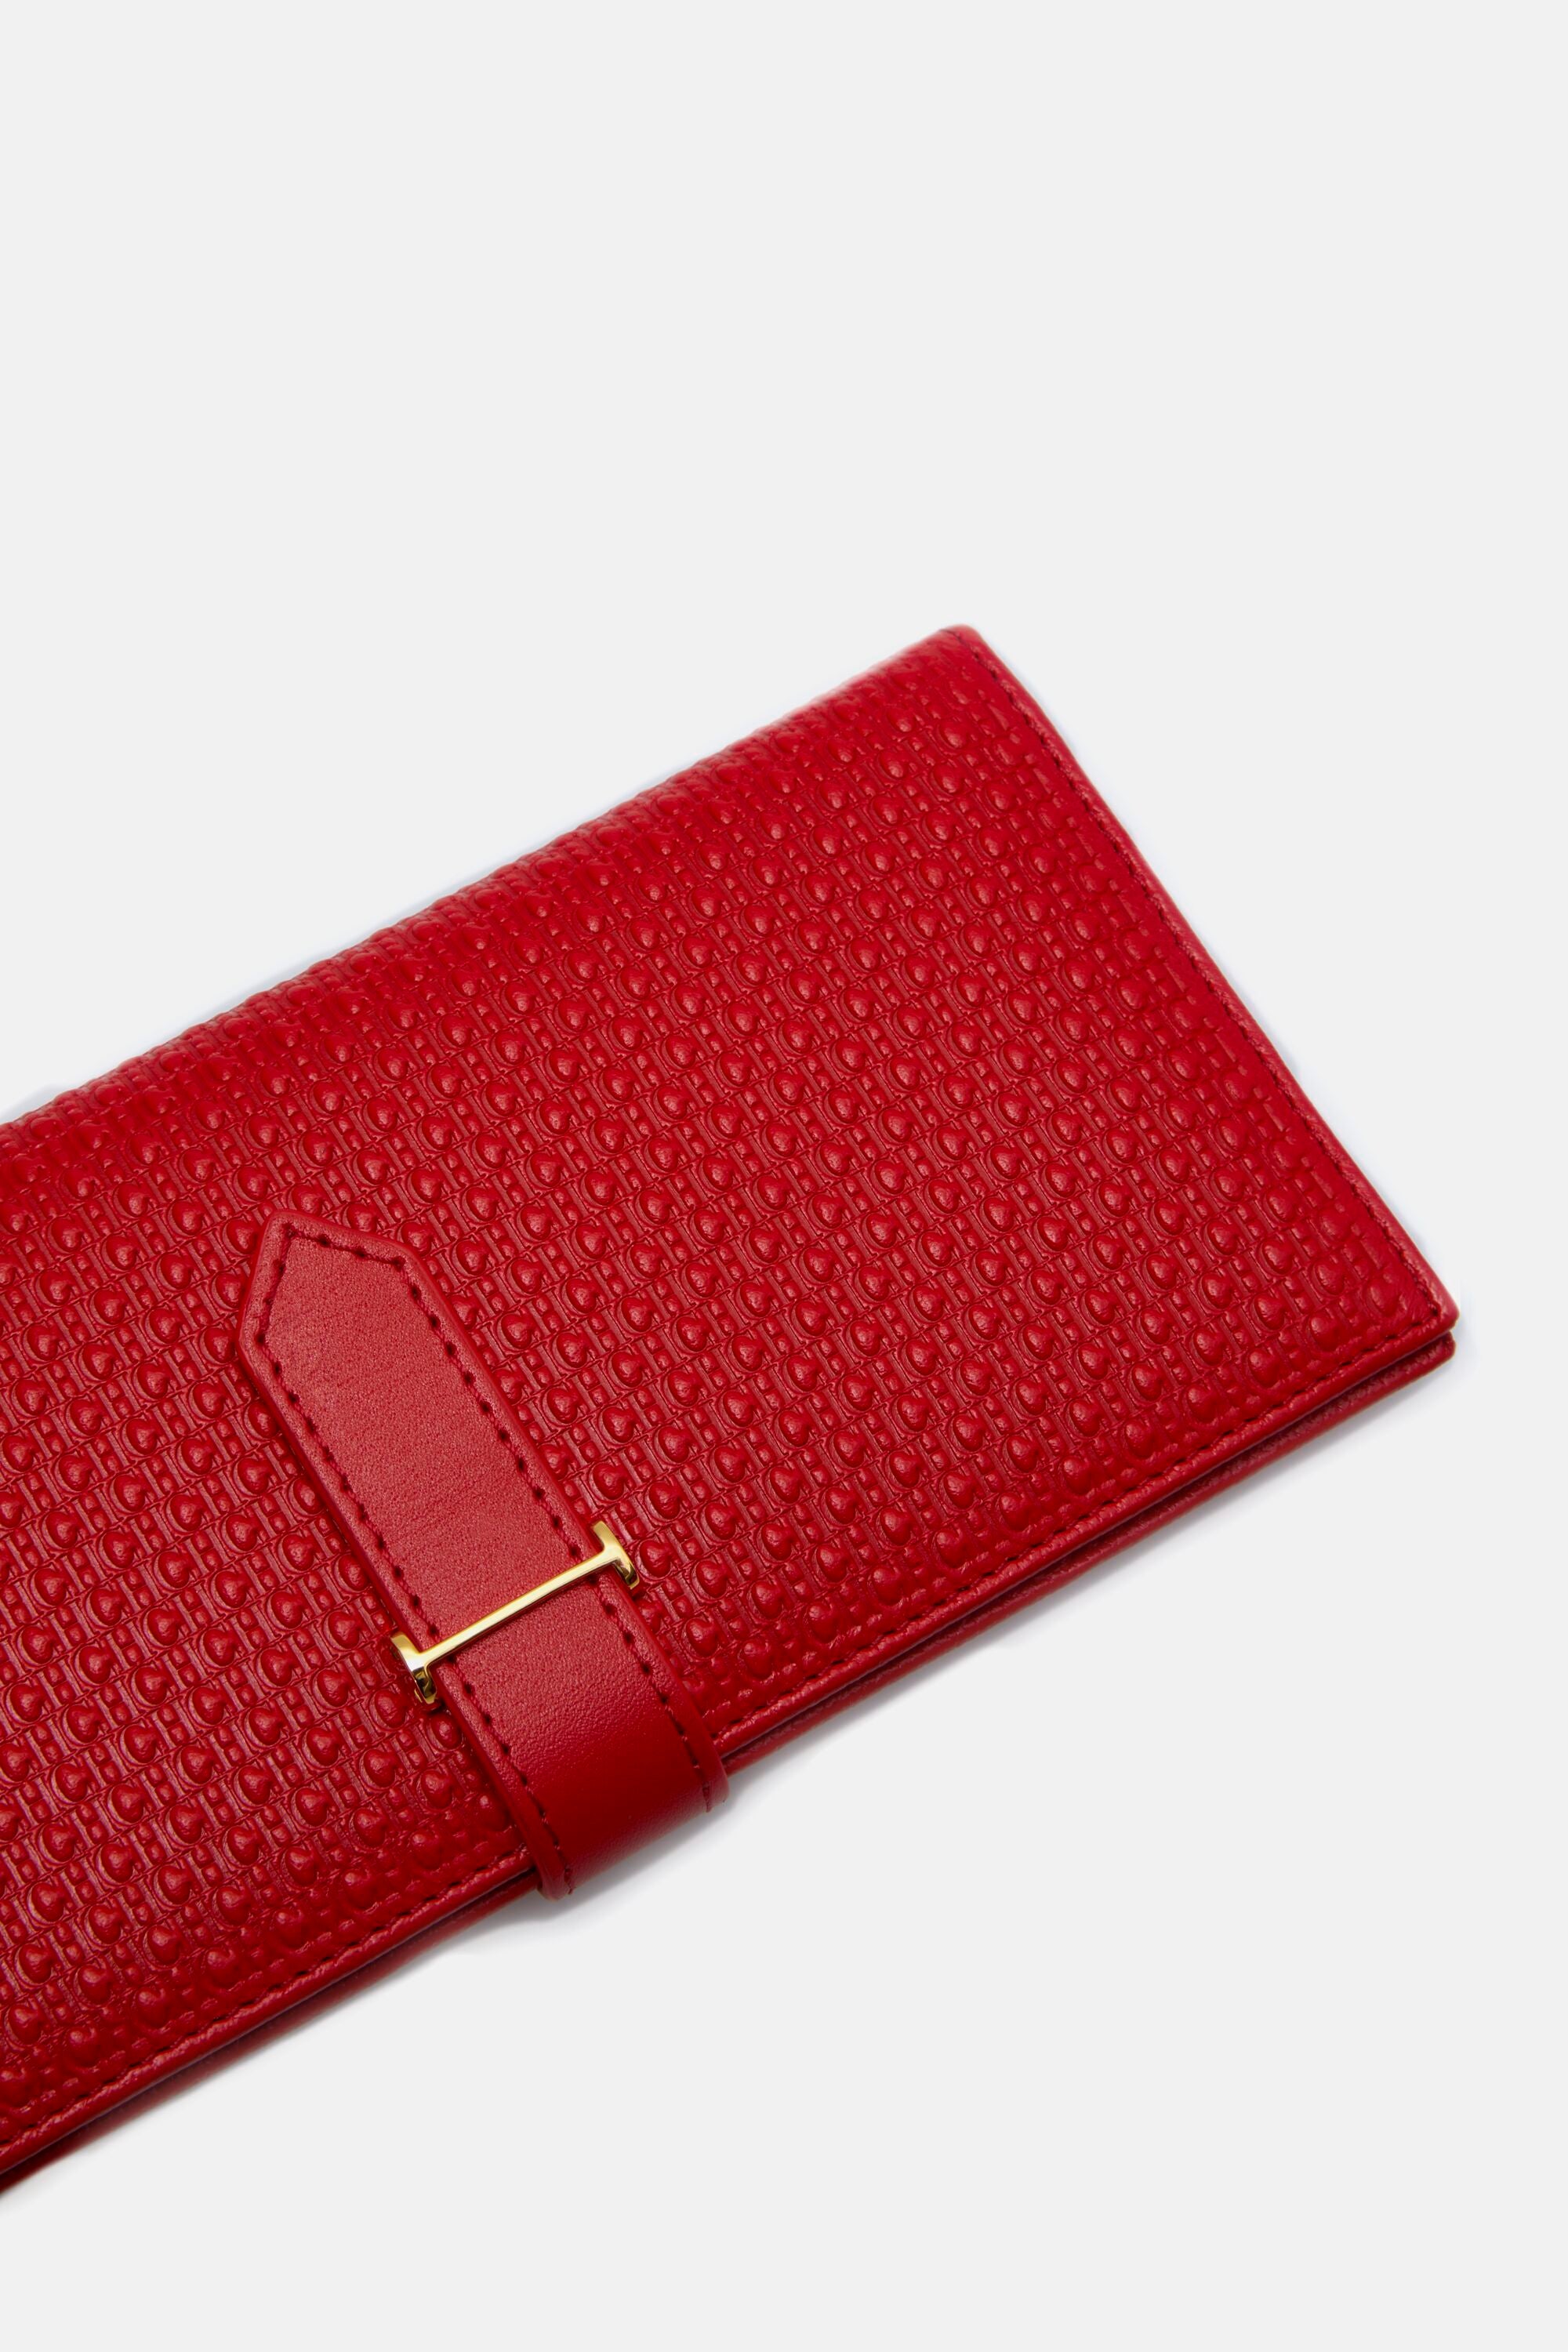 Insignia  Fold-over American wallet red - CH Carolina Herrera Italy